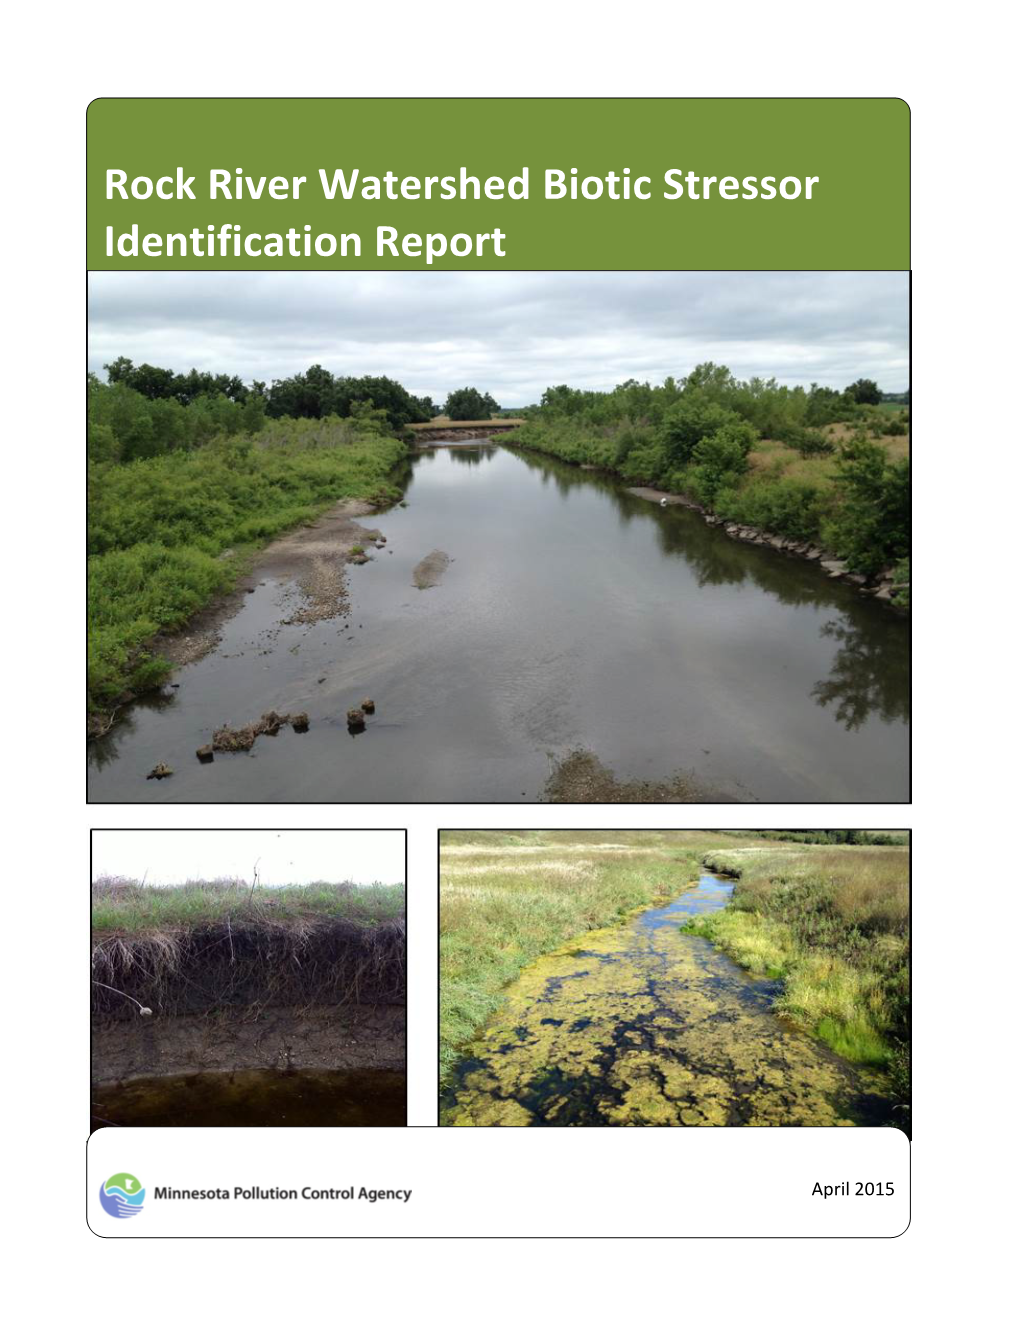 Rock River Watershed Biotic Stressor Identification Report